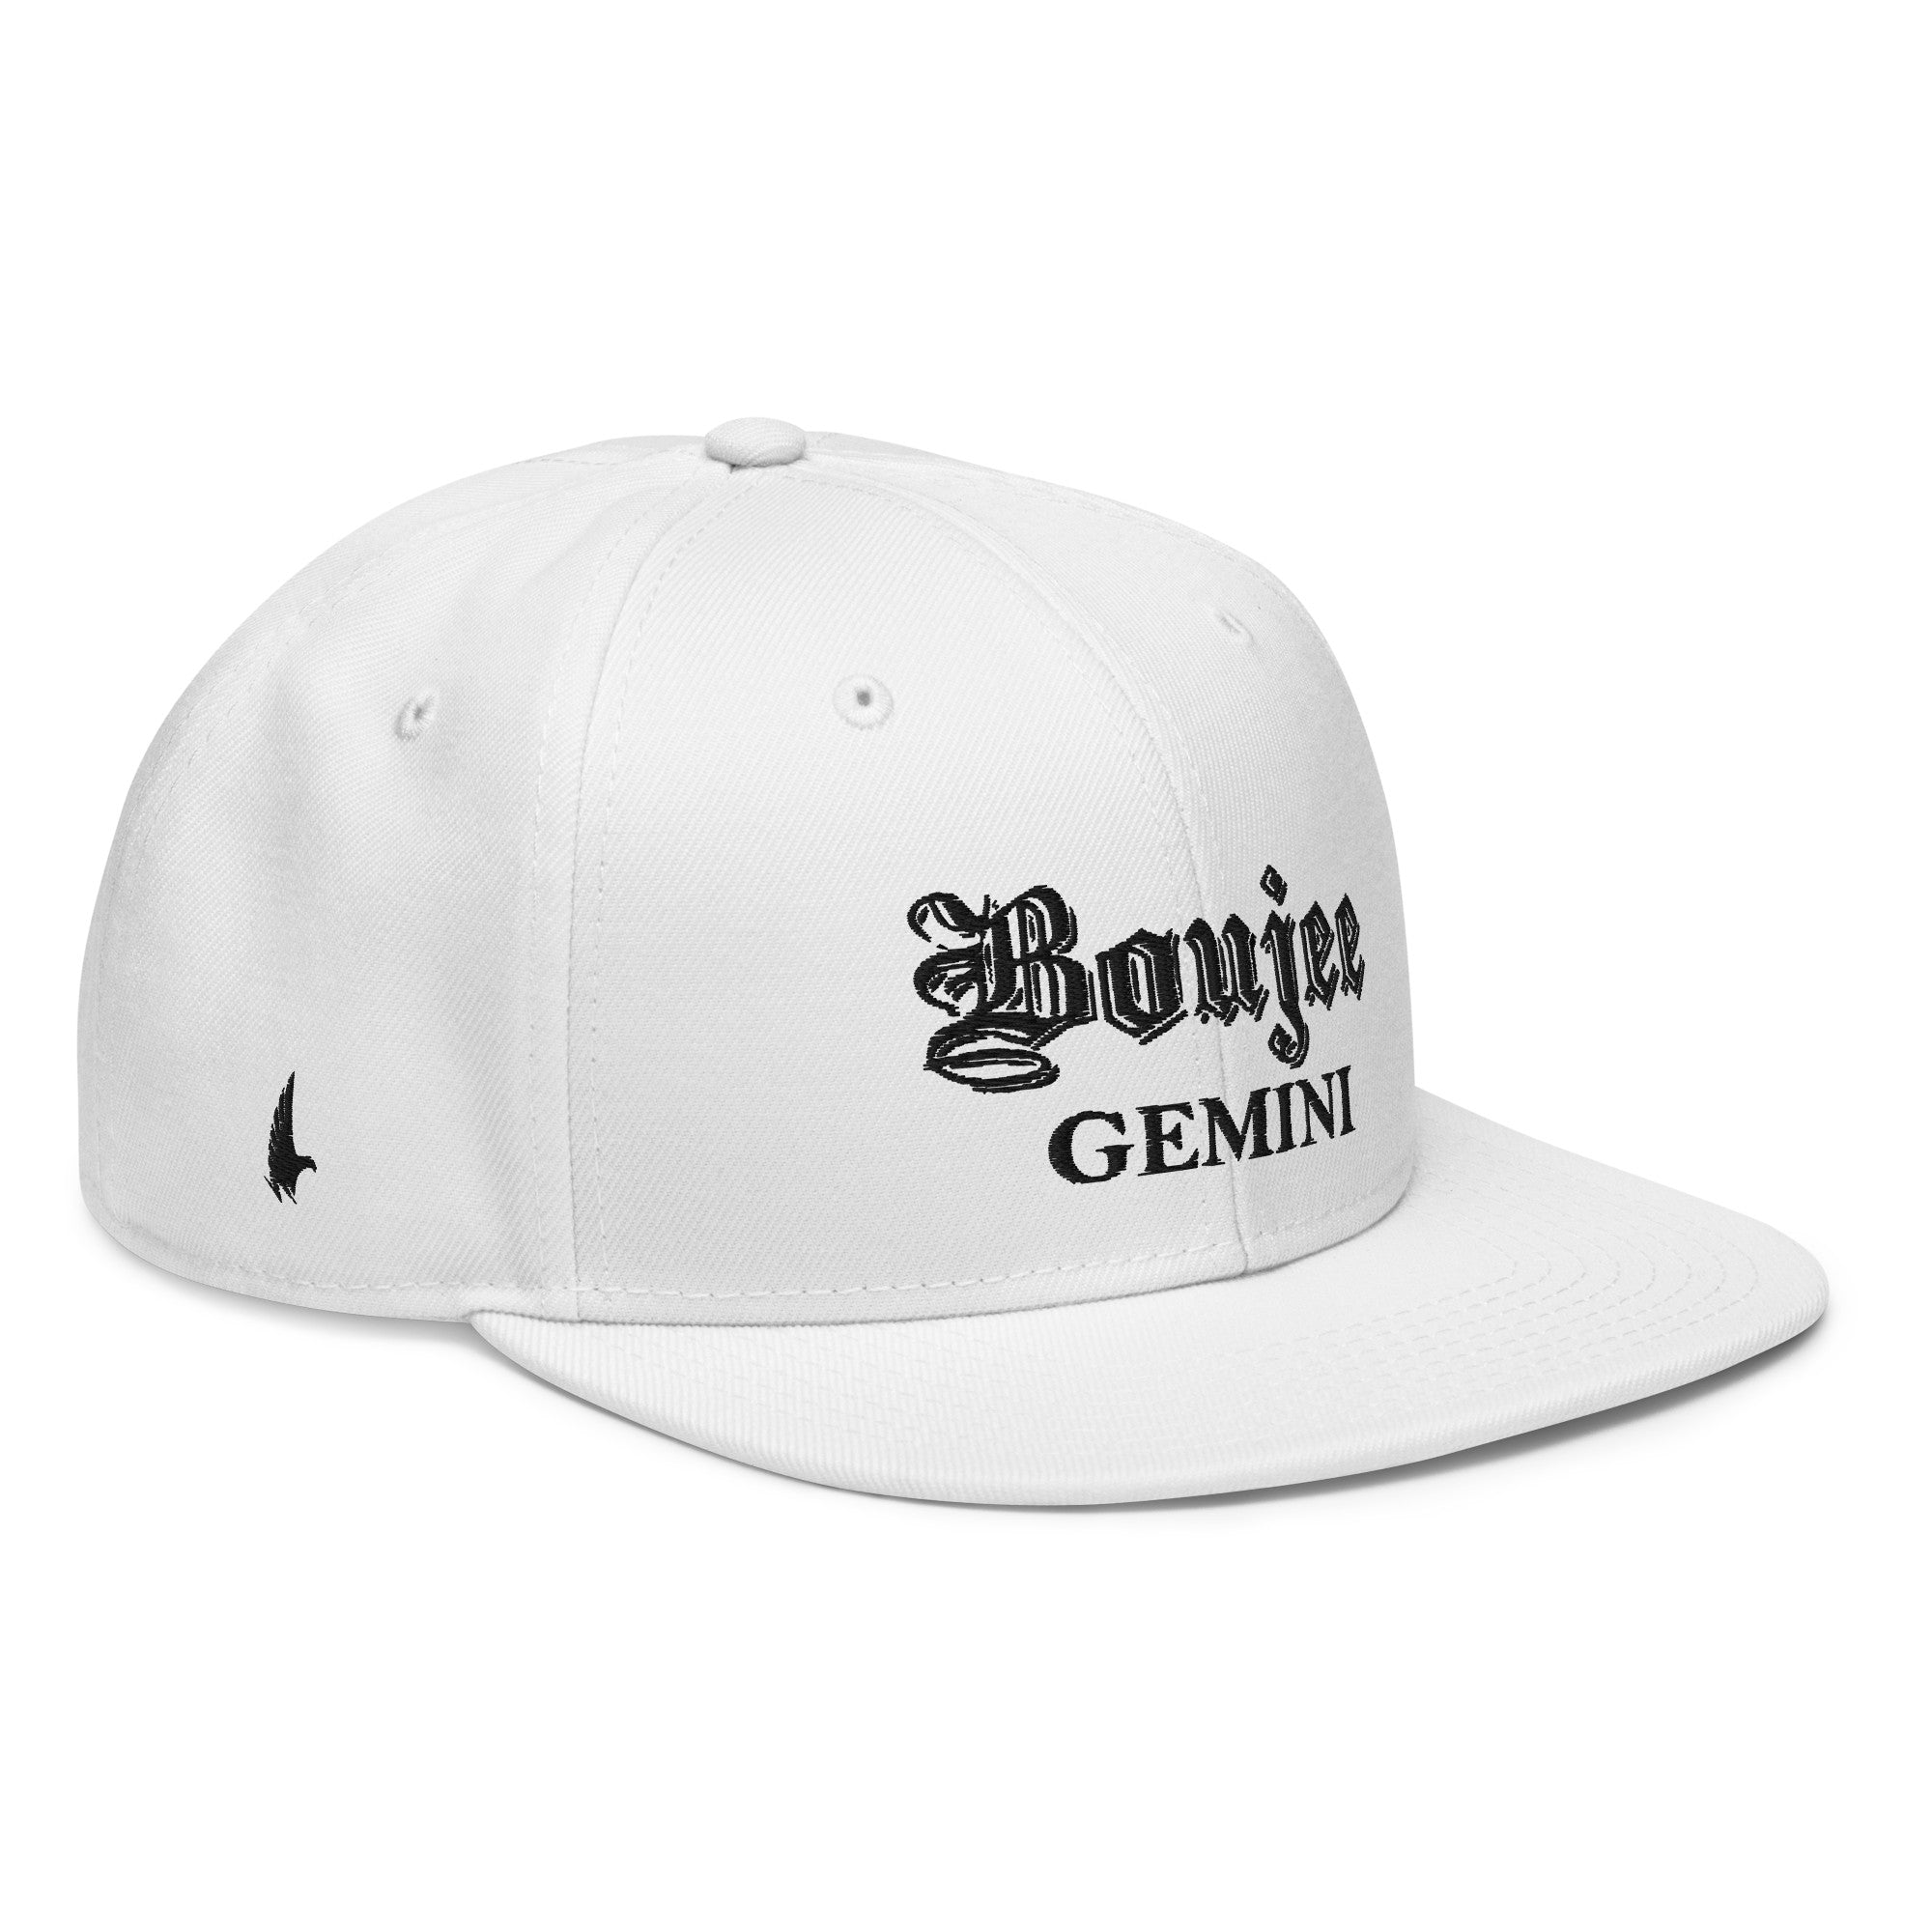 Boujee Gemini Snapback Hat - White/Black - Loyalty Vibes